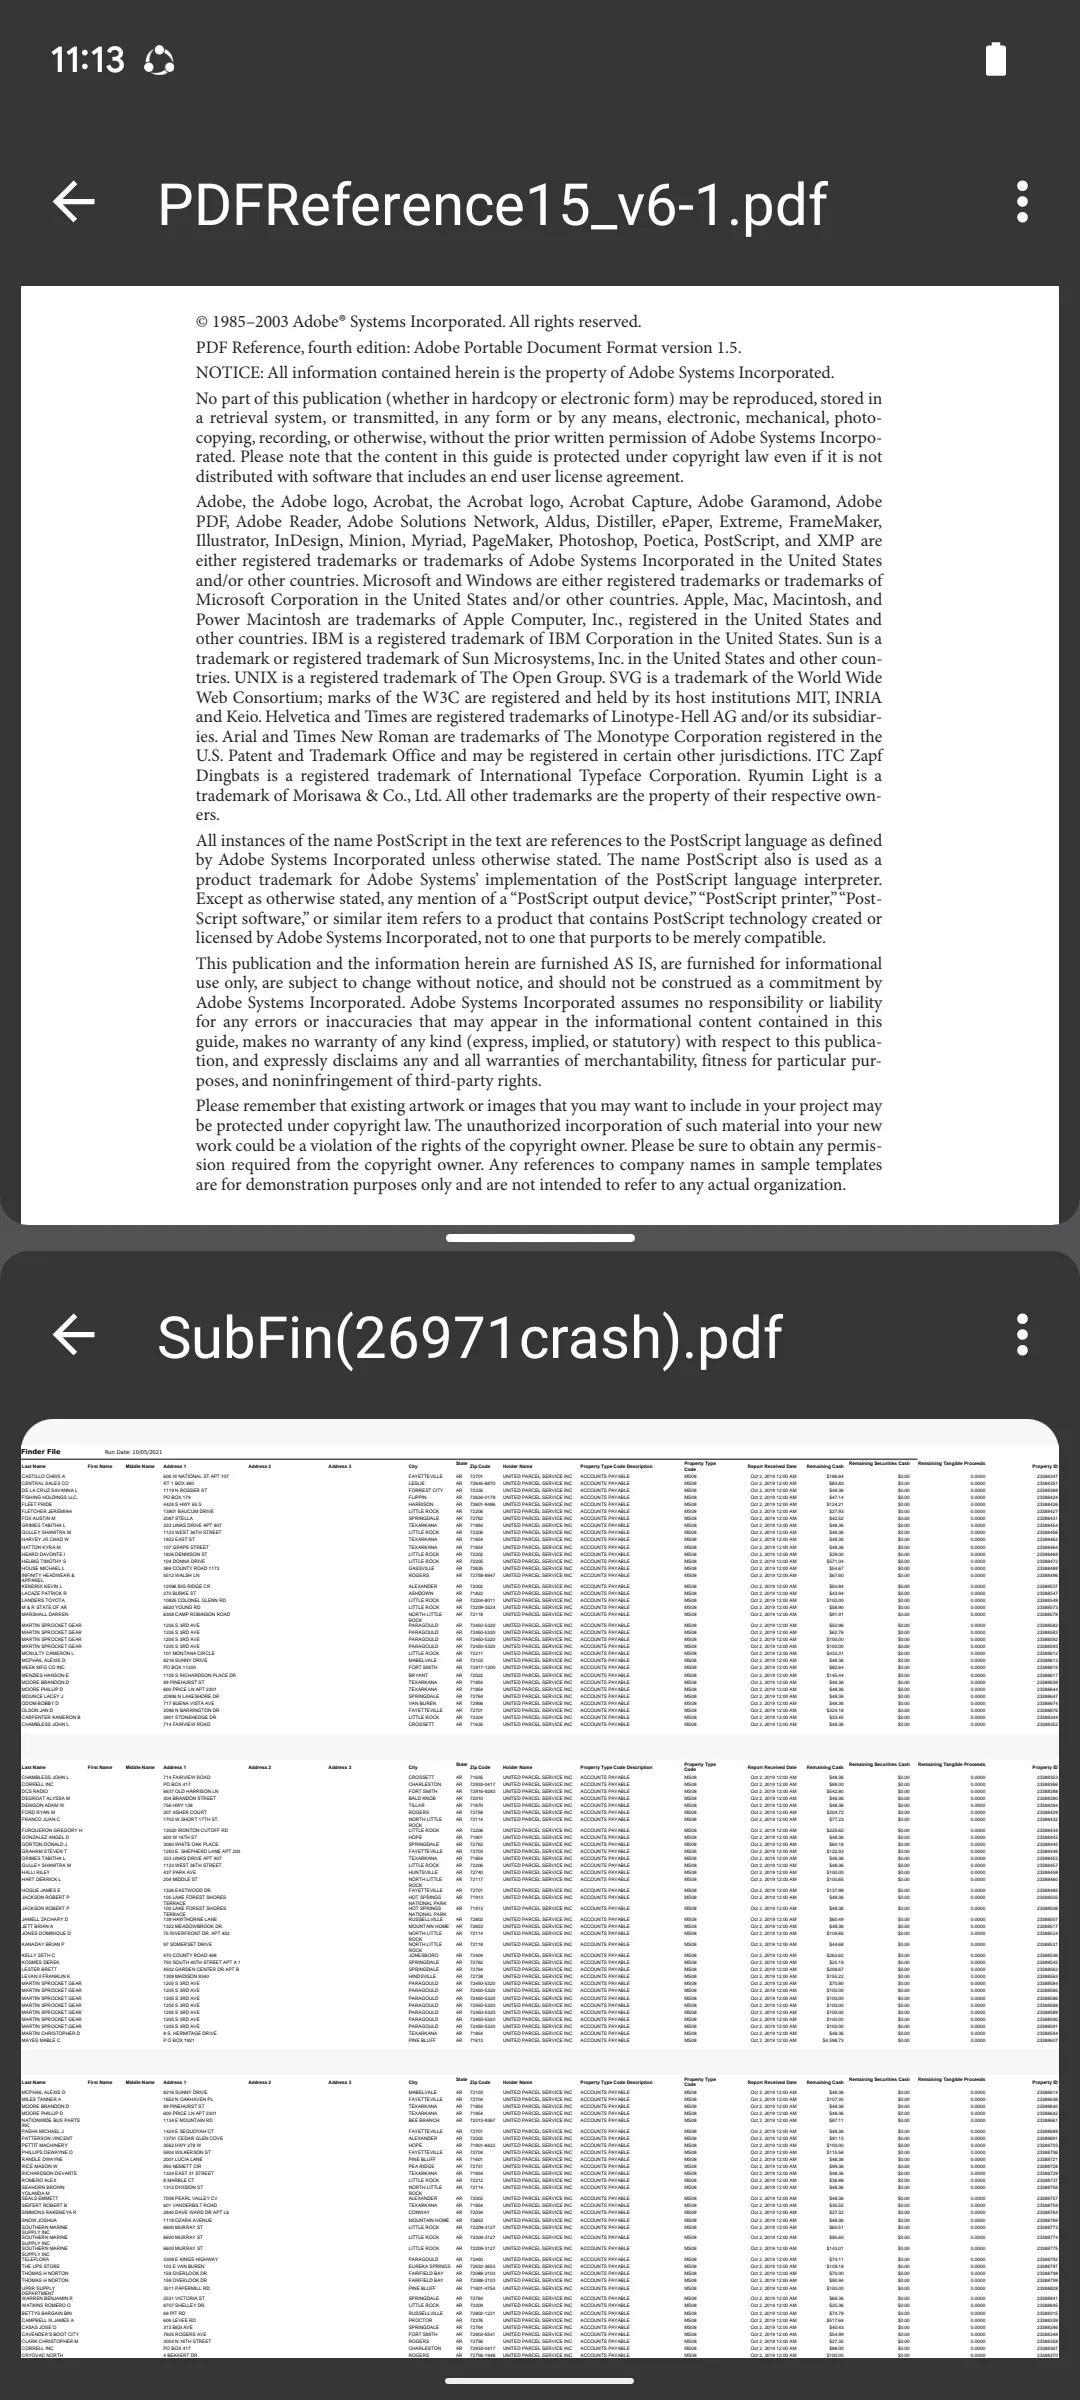 view pdf in split-screen mode